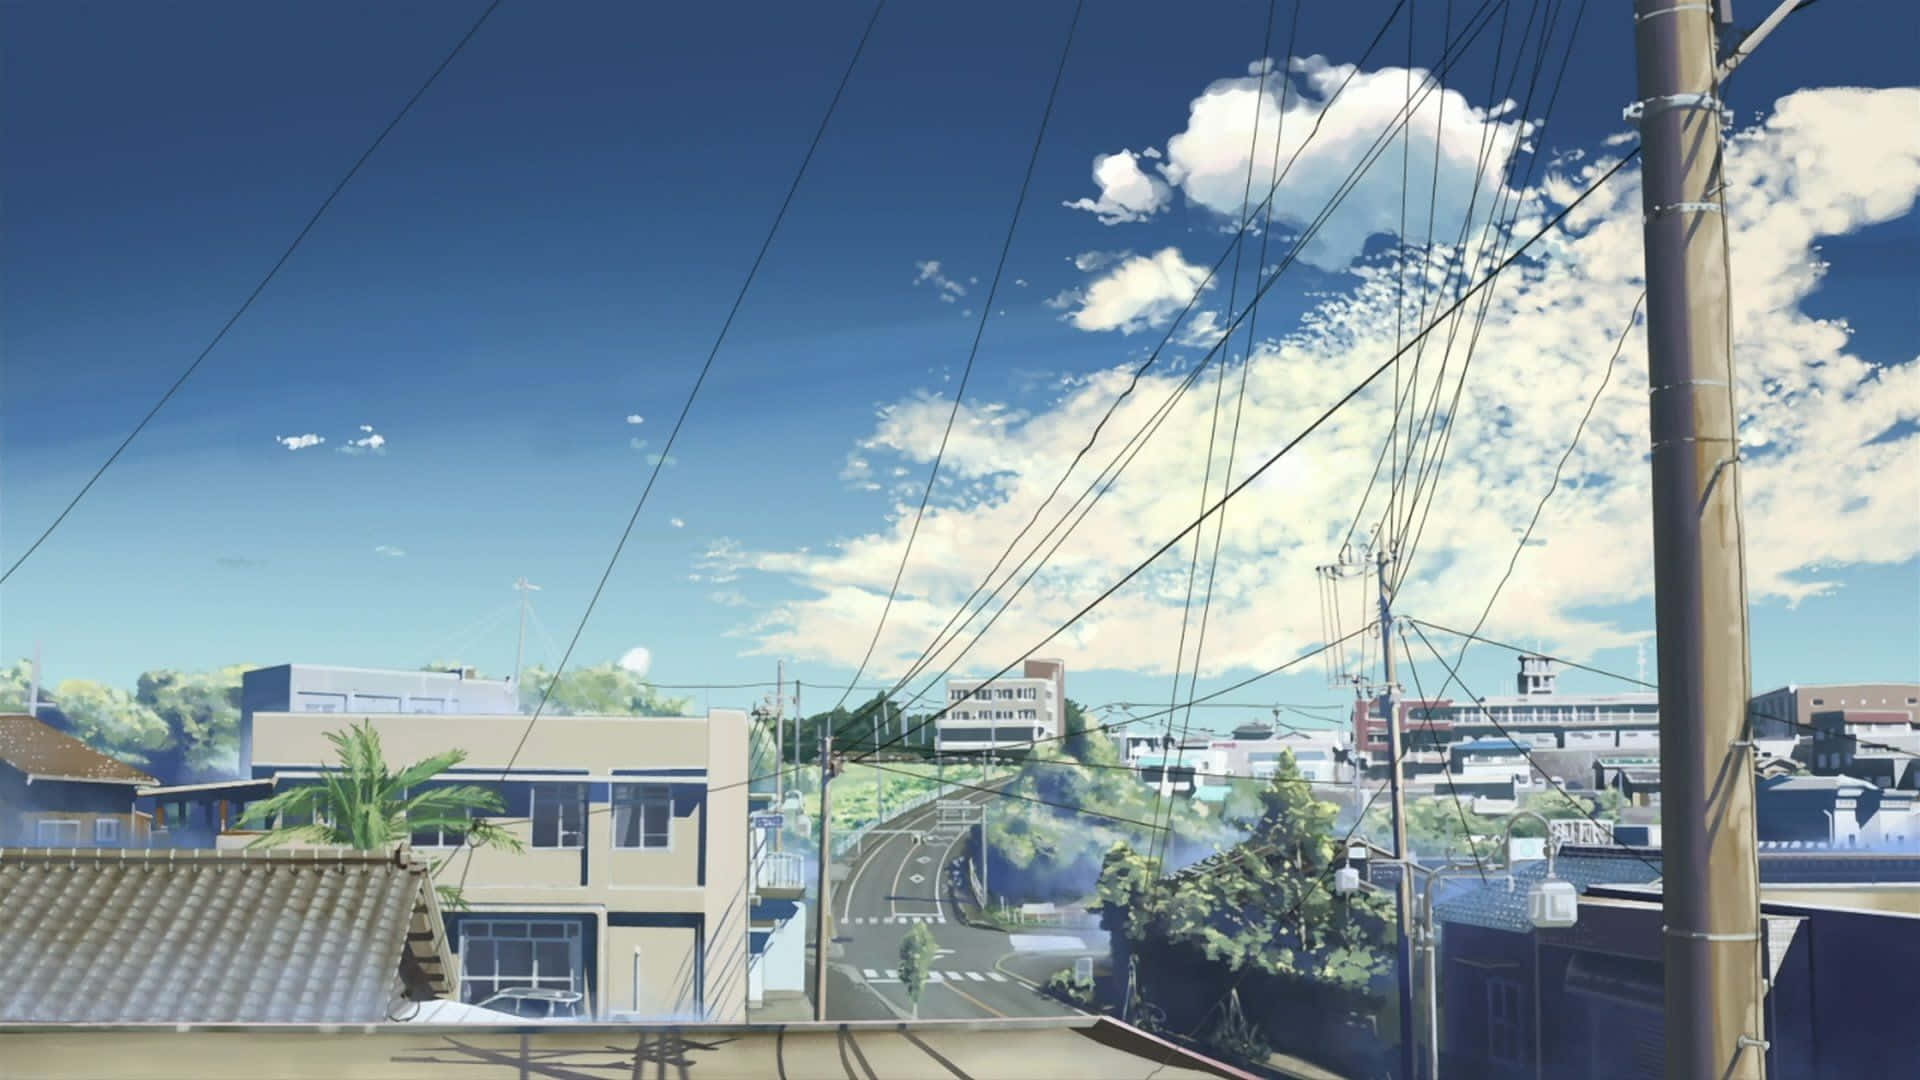 Download Blue Anime Aesthetic Desktop Wallpaper